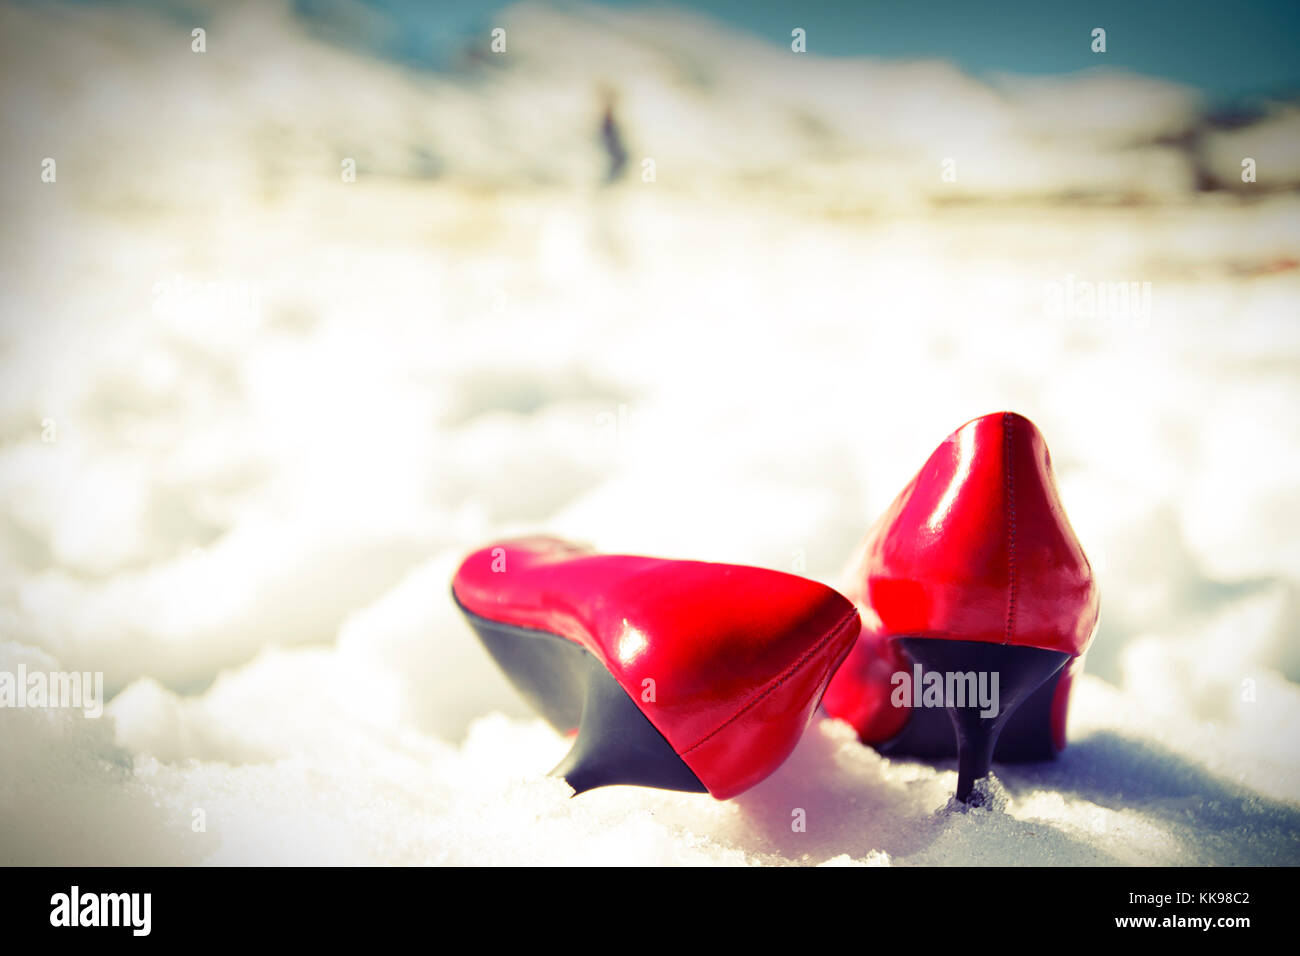 Rote Schuhe im Schnee. Querbearbeitung Filter hinzugefügt. Stockfoto